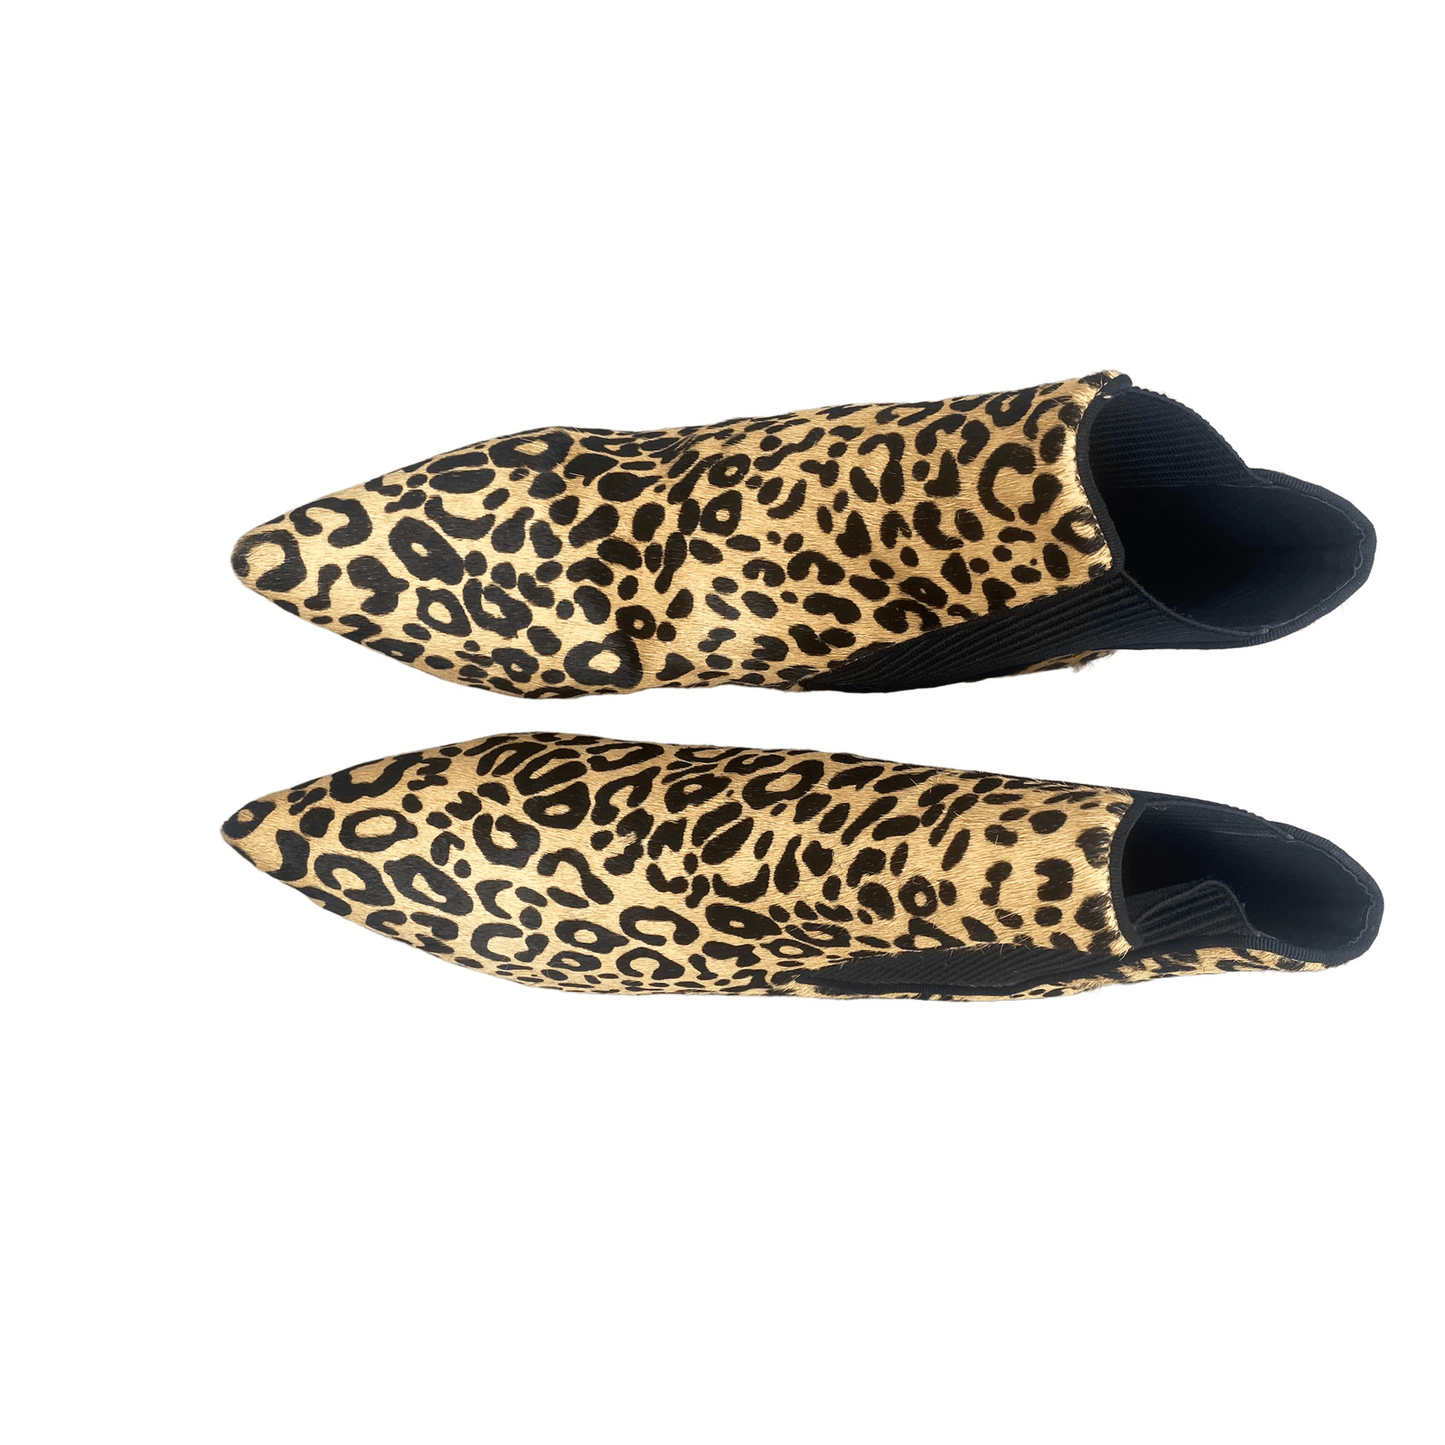 Sol Sana Ella Boot stretch leopard boot | size 7 or EU 38 - as new RRP $299